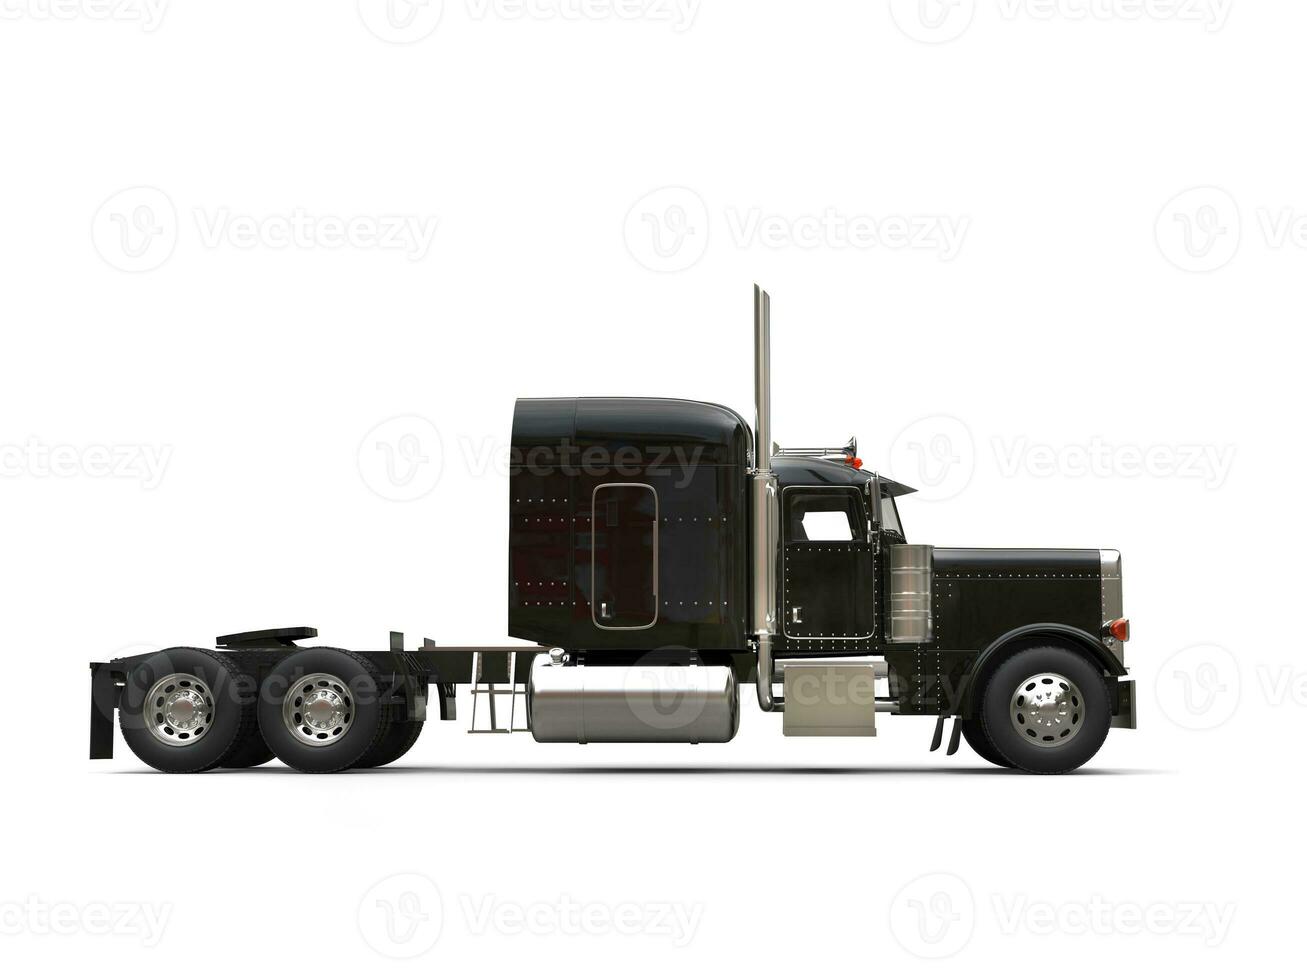 Black 18 wheeler truck - no trailer - side view photo